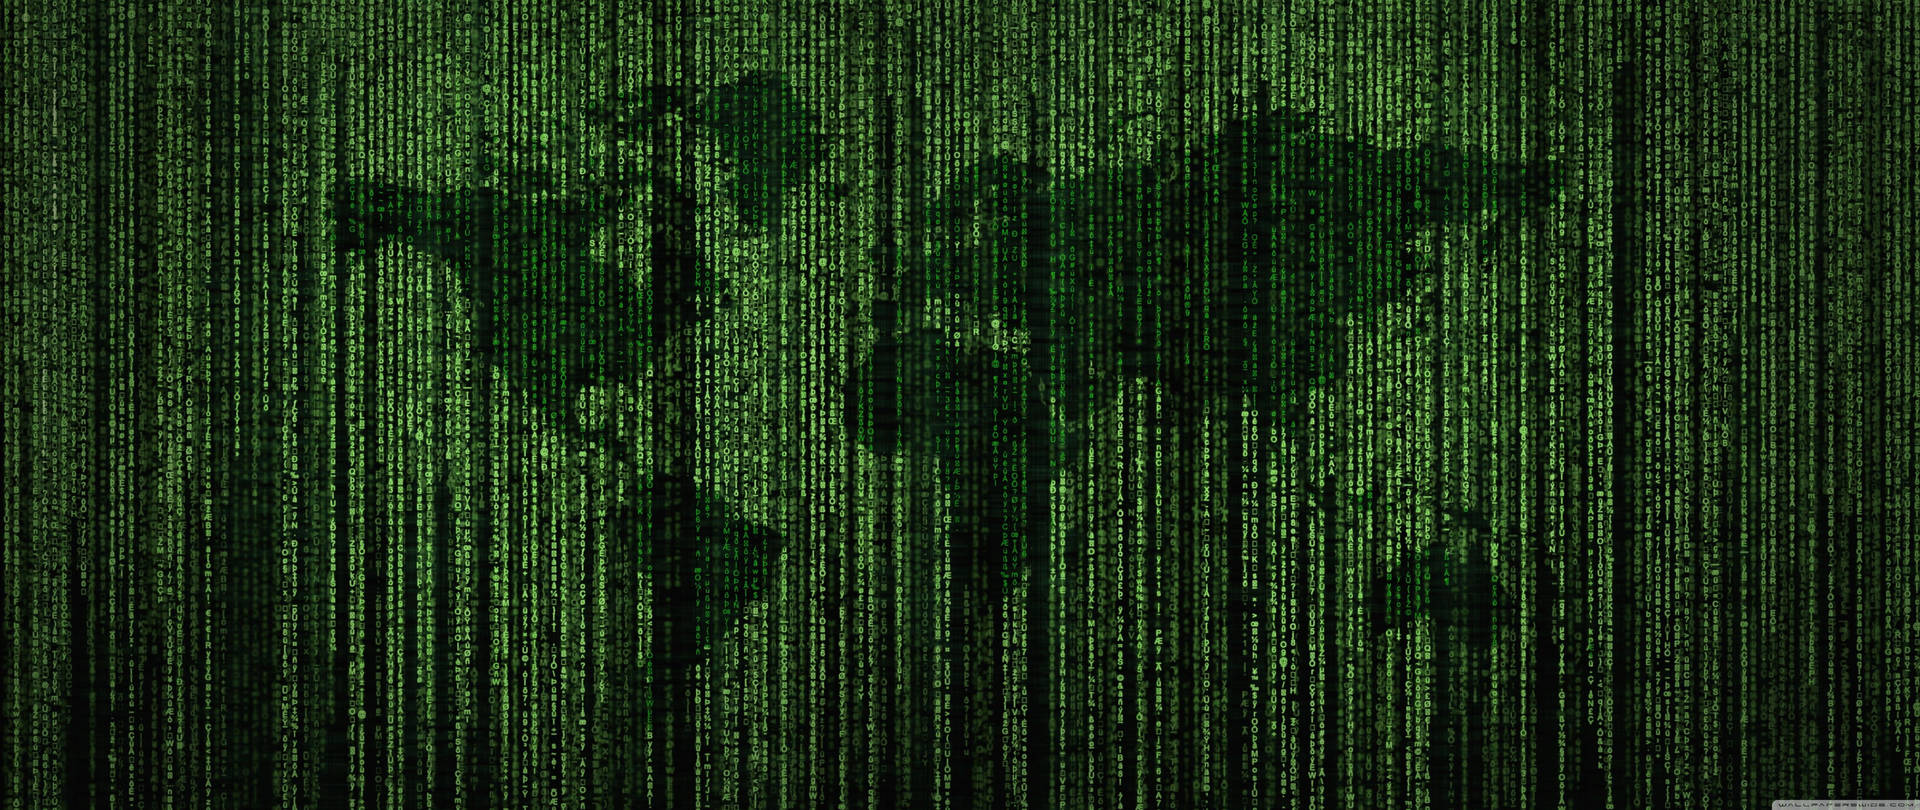 World in Green Matrix Wallpaper